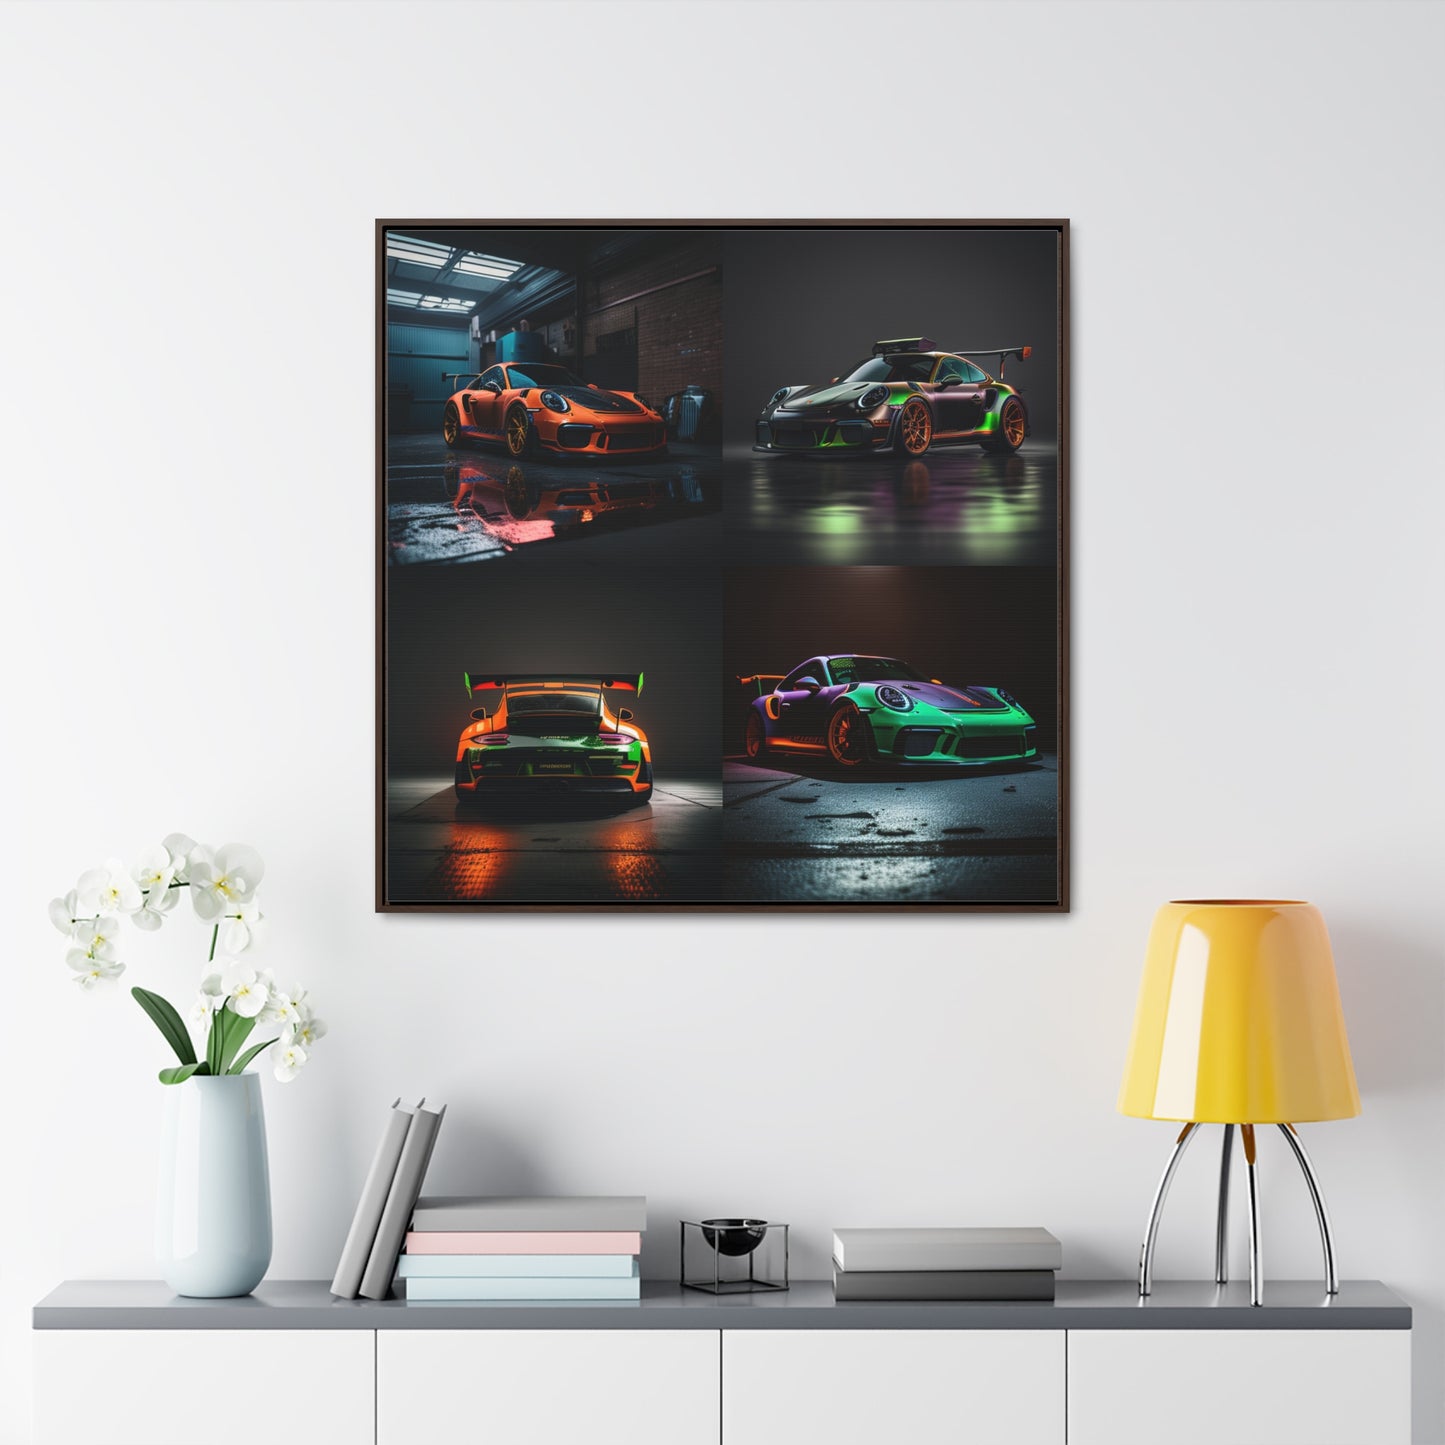 Gallery Canvas Wraps, Square Frame Porsche Color 5